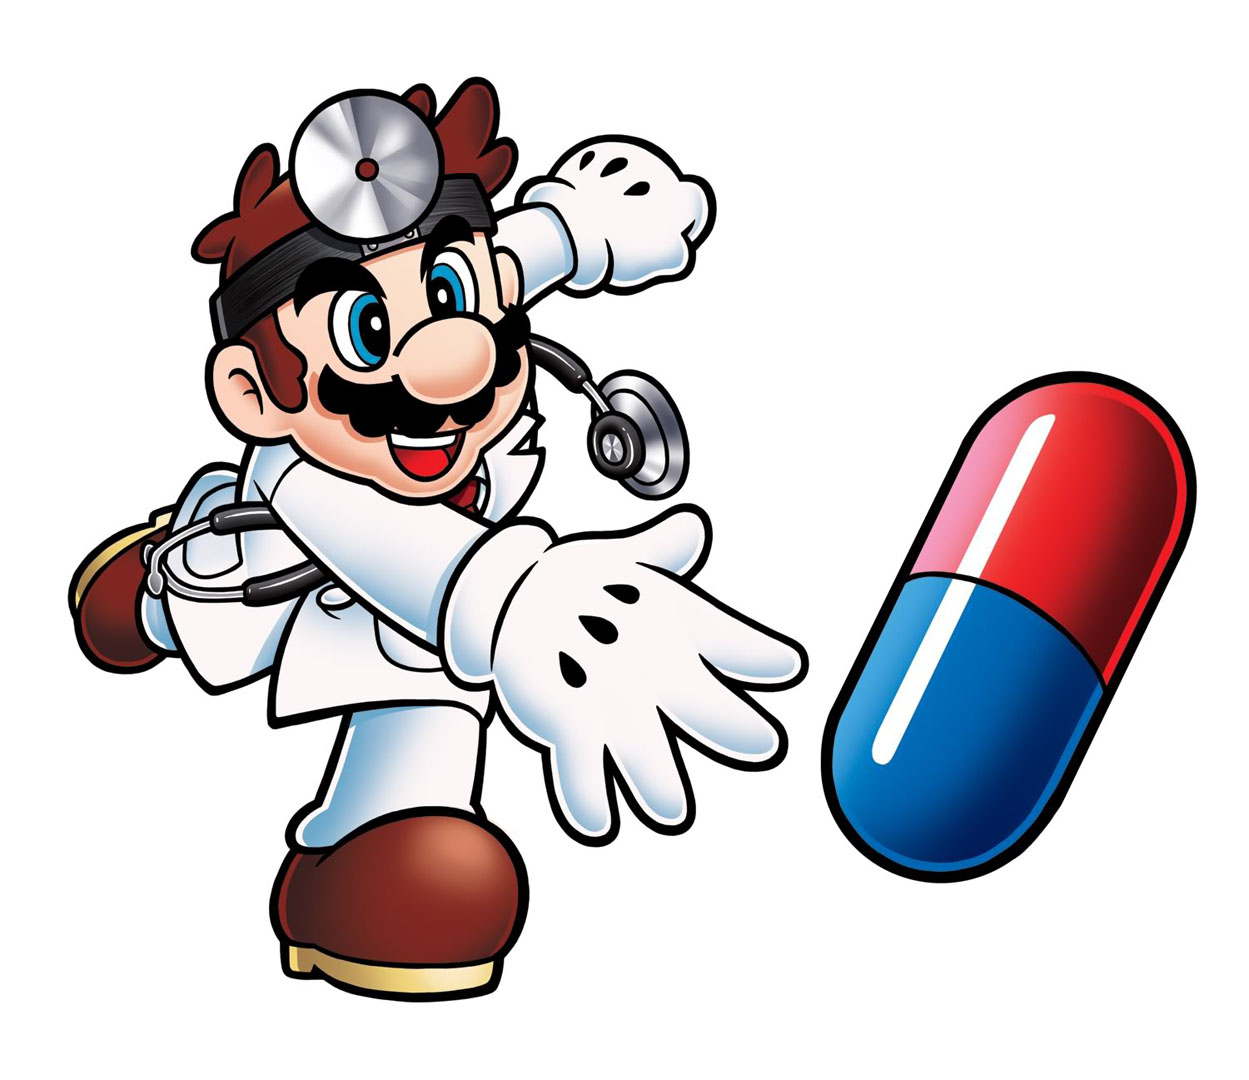 Dr Mario Nintendo Games Wallpaper Image Featuring